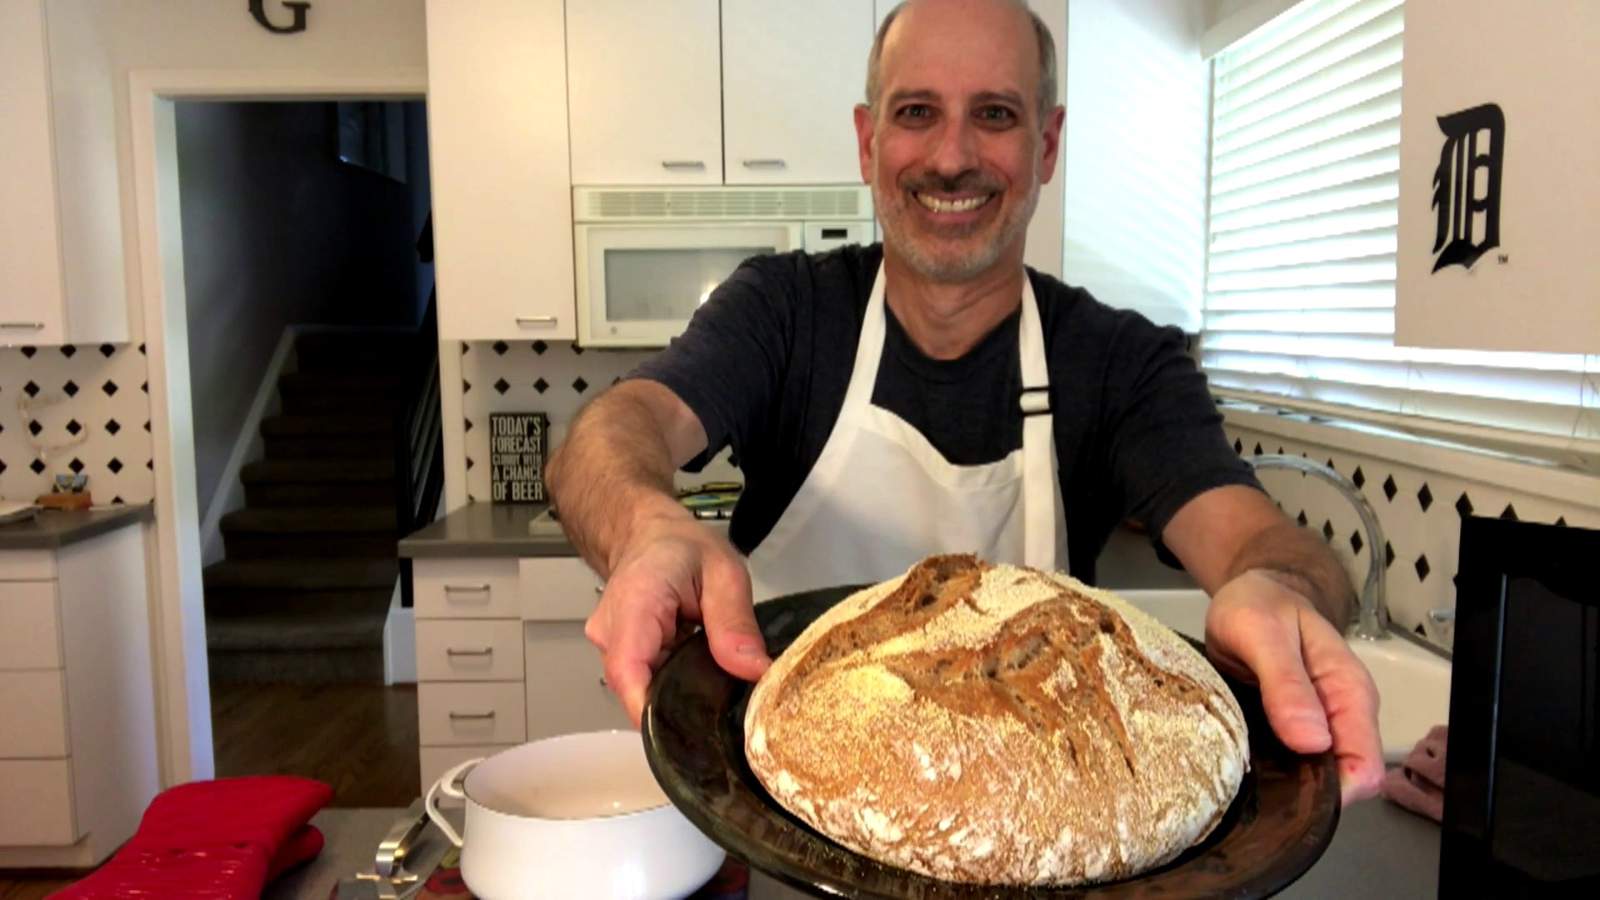 Tasty Tuesday Home Edition: Paul Gross shares secret no-knead bread recipe